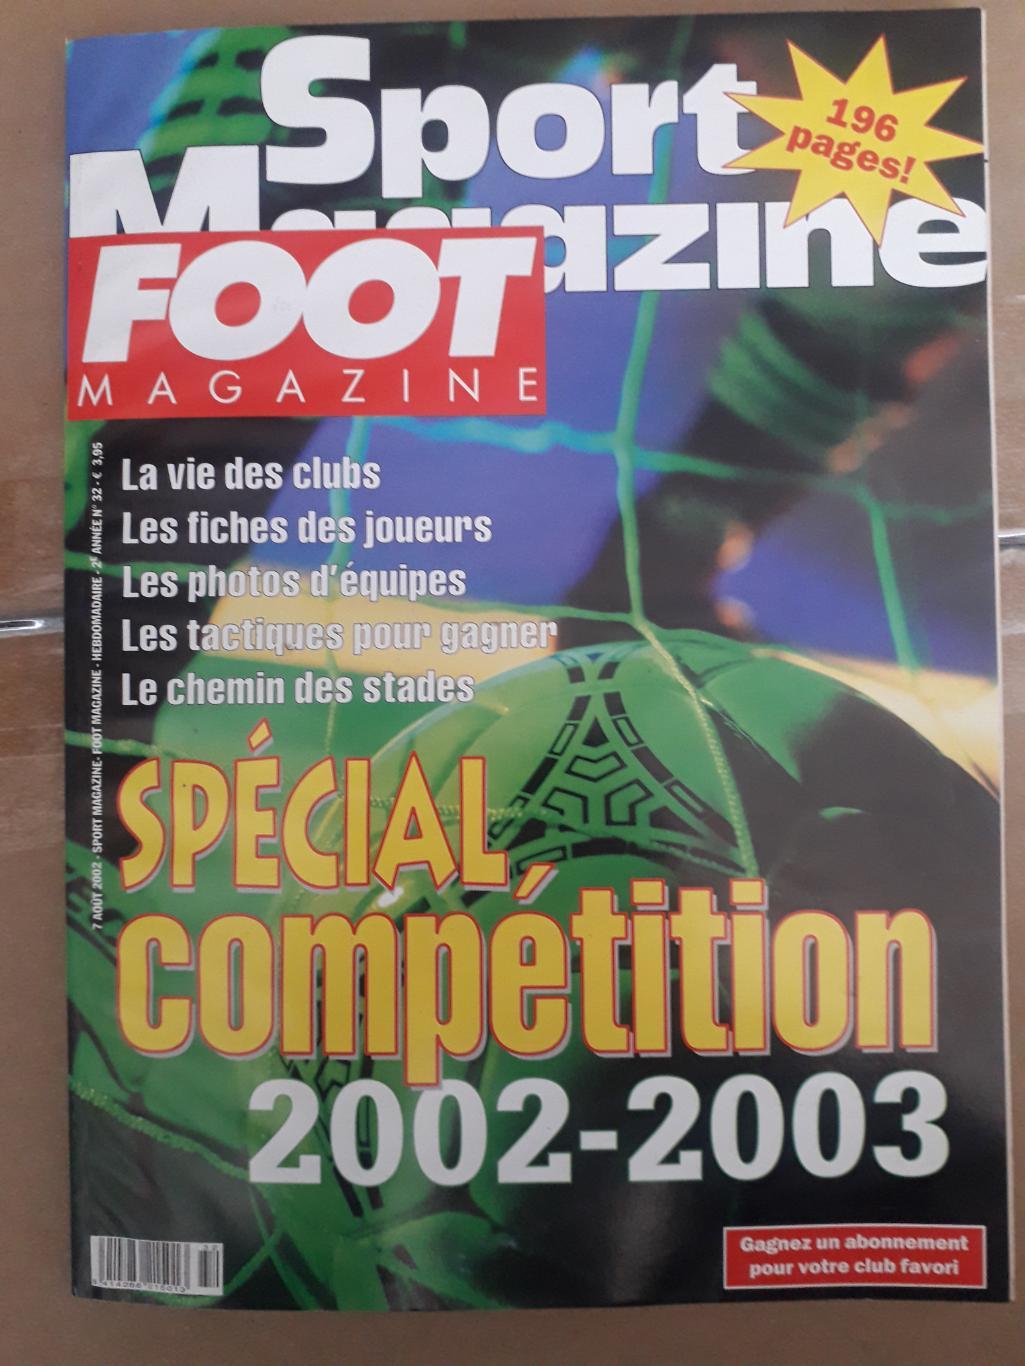 Foot magazine 2002/03